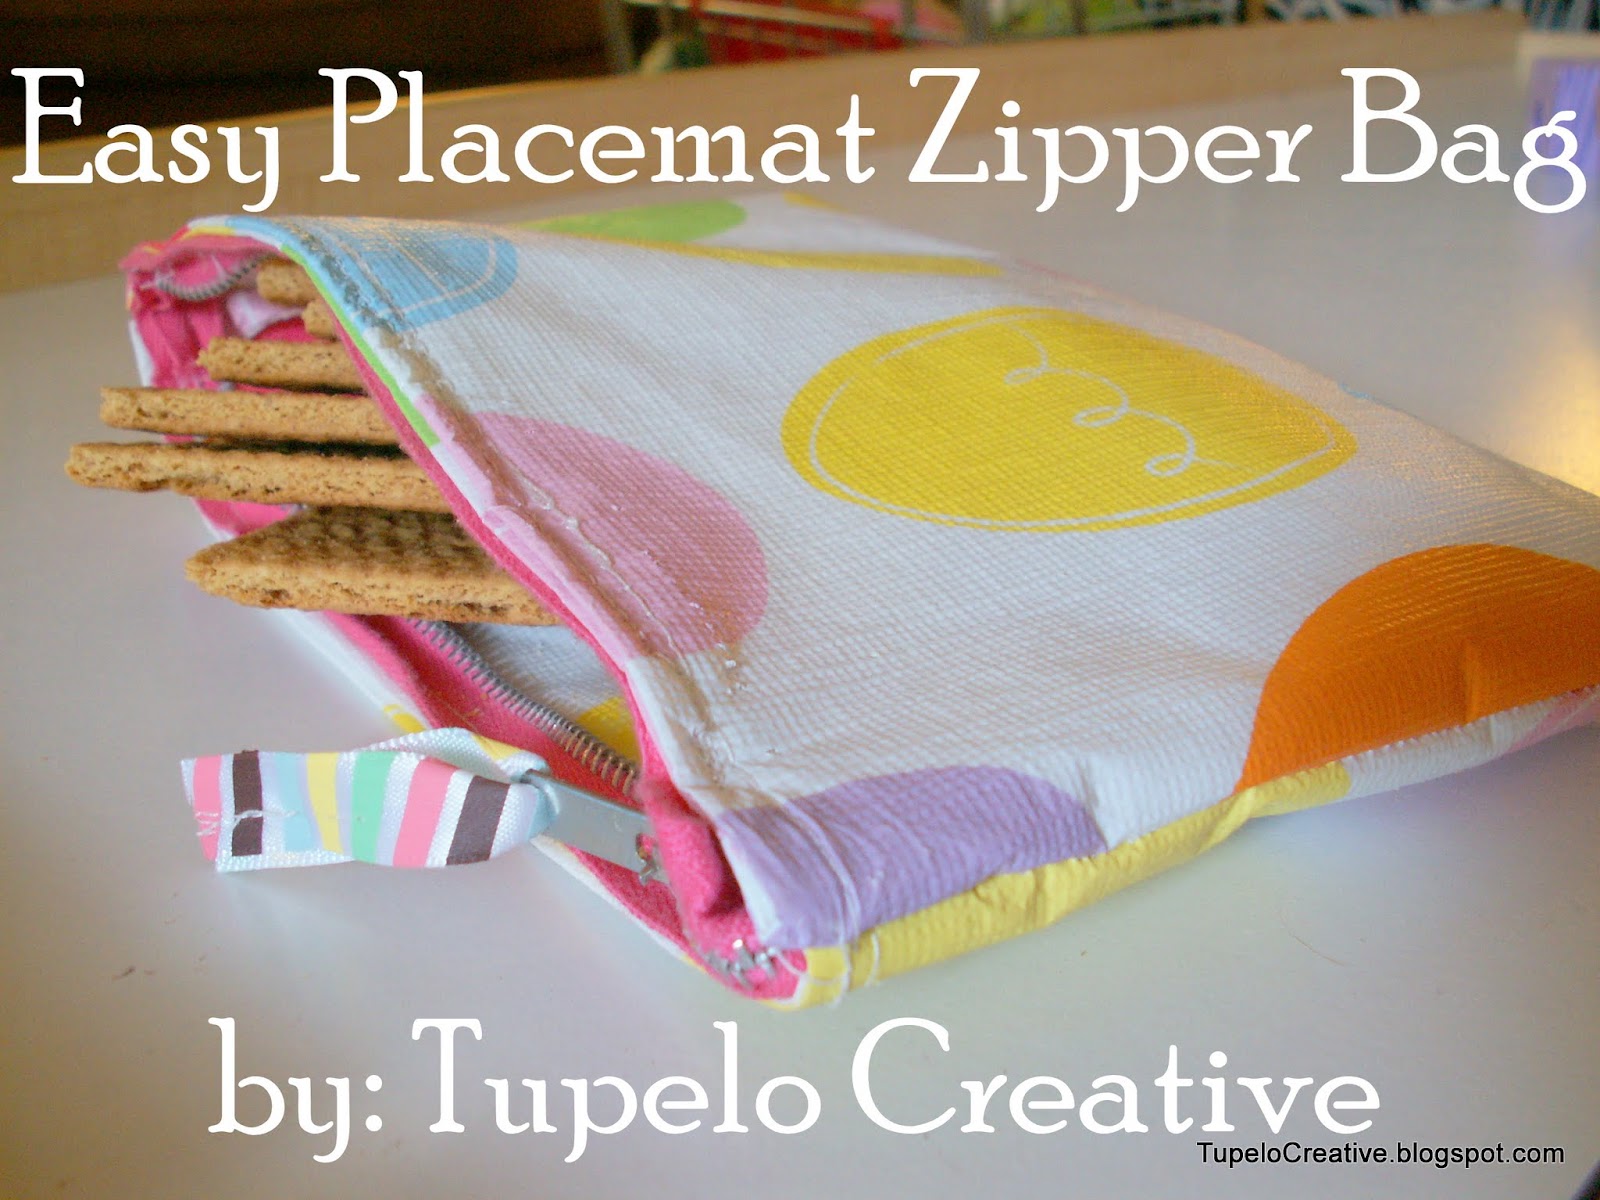 Tupelo Creative: Placemat Zipper Bag Tutorial